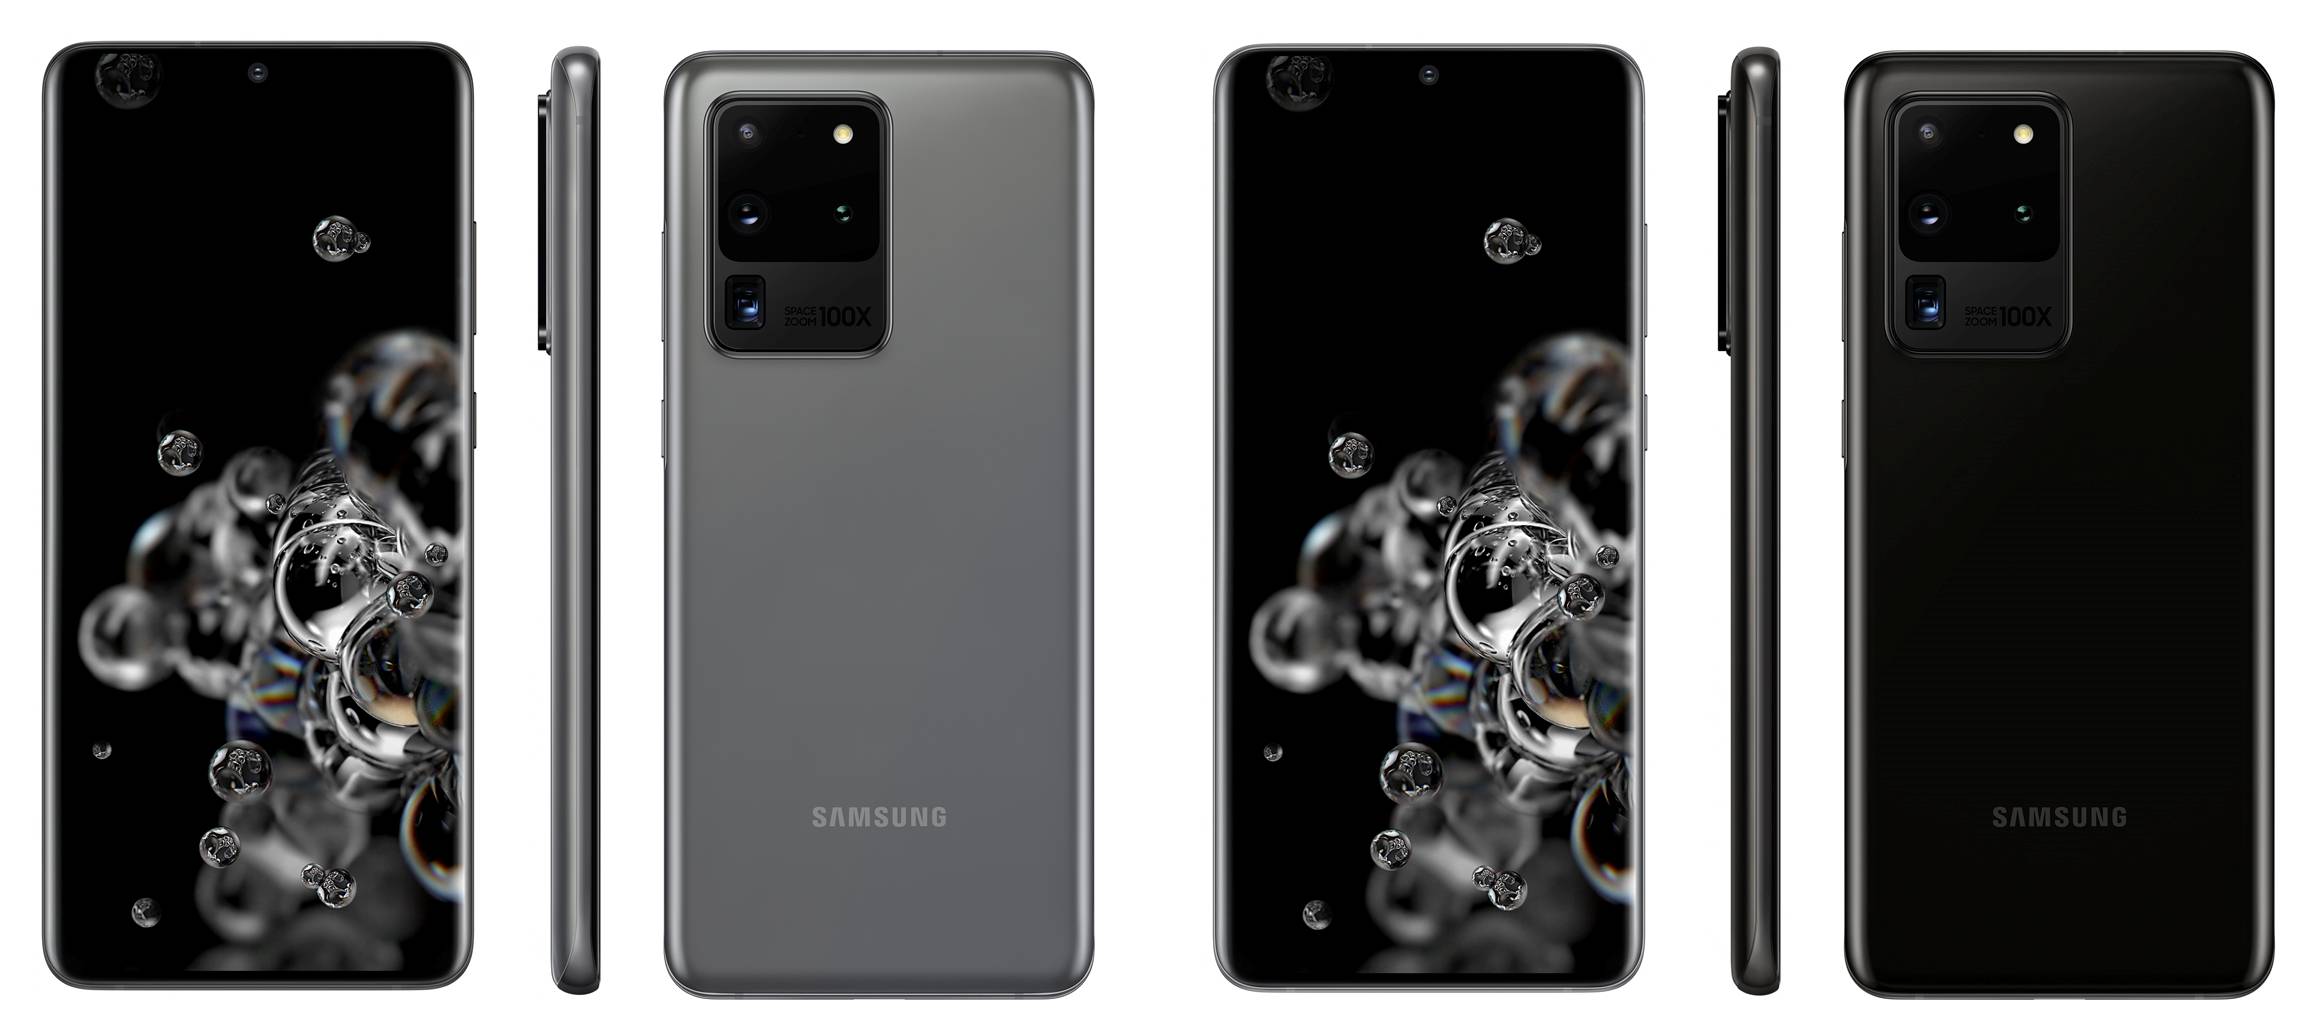 Immagini stampa ufficiali di Samsung GALAXY S20 Ultra